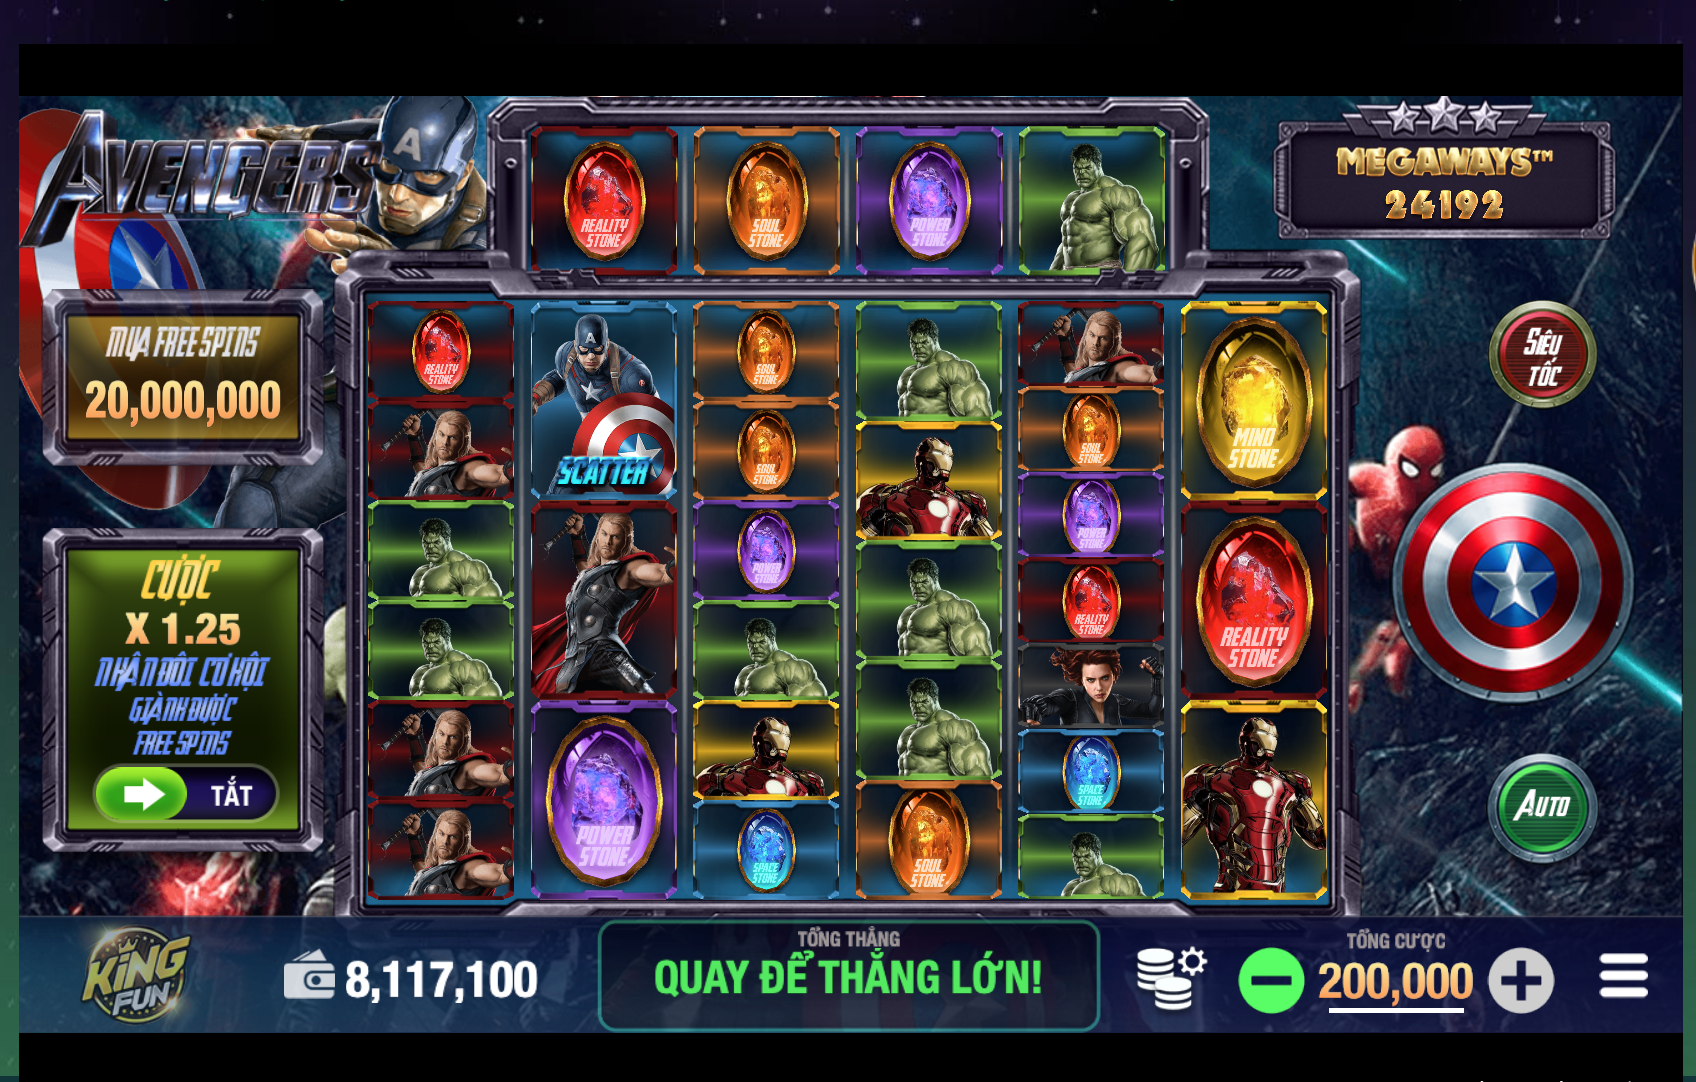 Slot game Avengers tại Kingfun với giao diện hấp dẫn